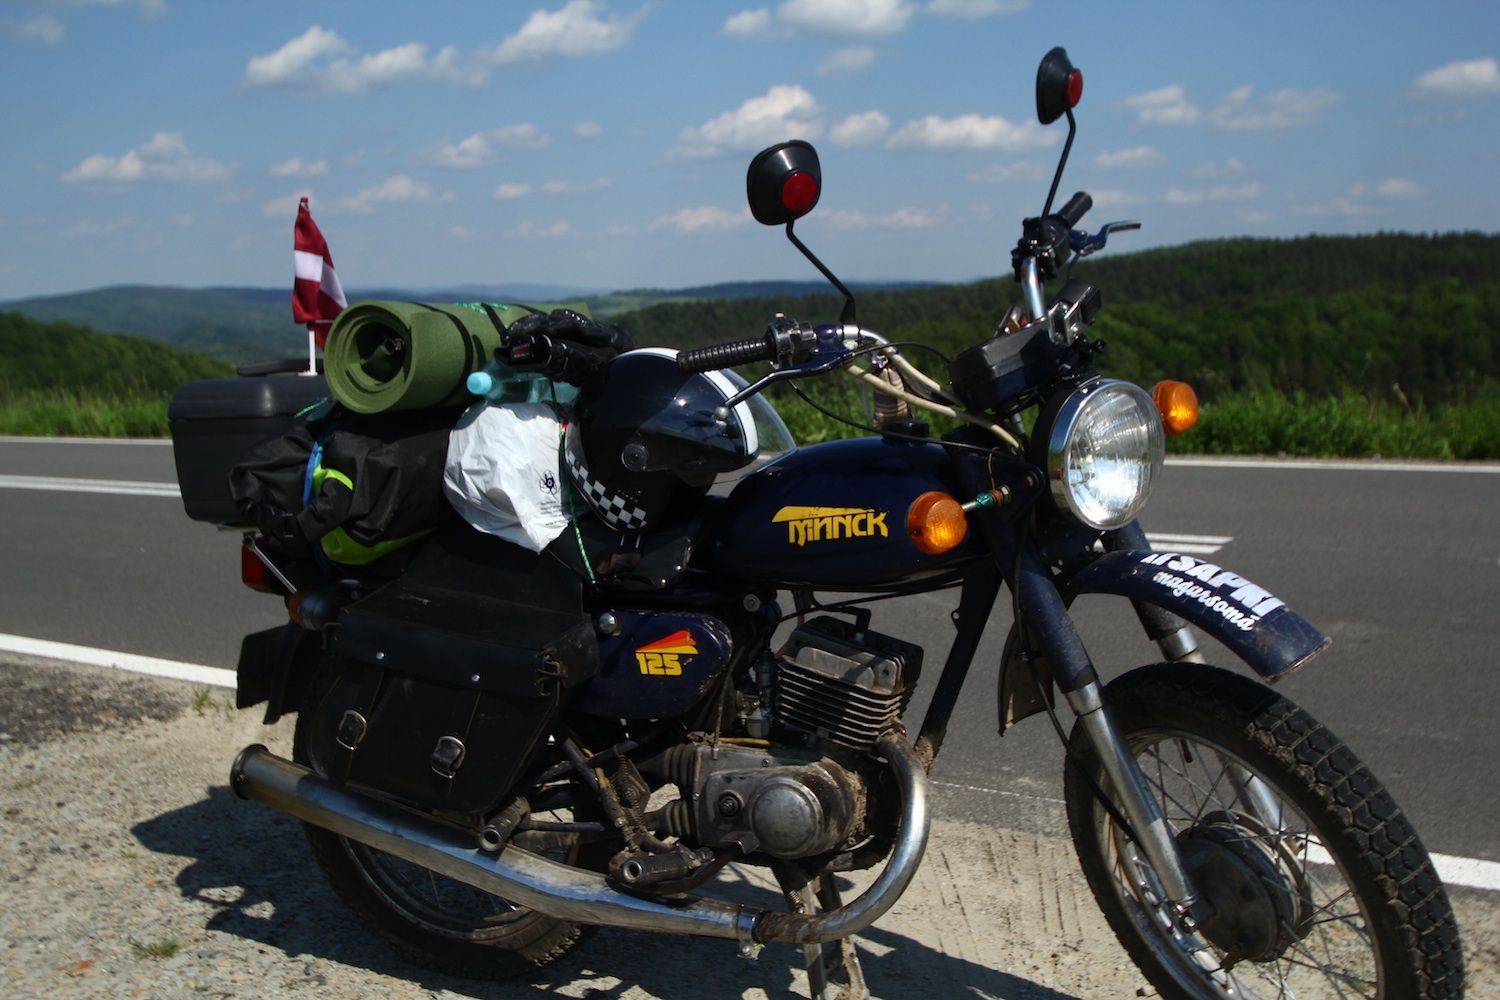 The dream machine: 125cc Minsk motorcycle